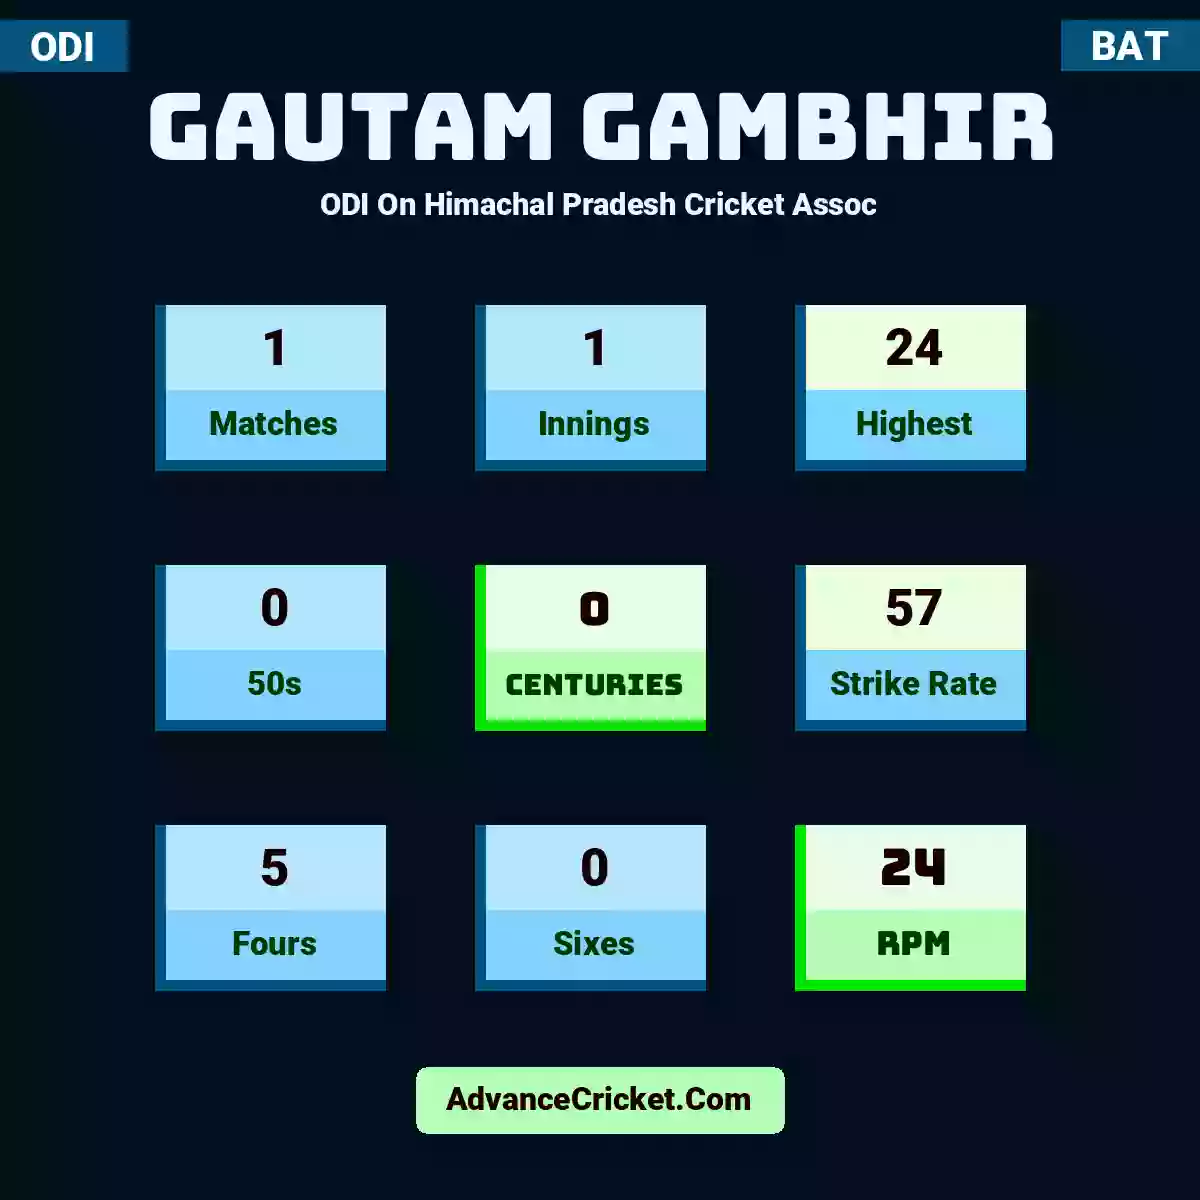 Gautam Gambhir ODI  On Himachal Pradesh Cricket Assoc, Gautam Gambhir played 1 matches, scored 24 runs as highest, 0 half-centuries, and 0 centuries, with a strike rate of 57. G.Gambhir hit 5 fours and 0 sixes, with an RPM of 24.